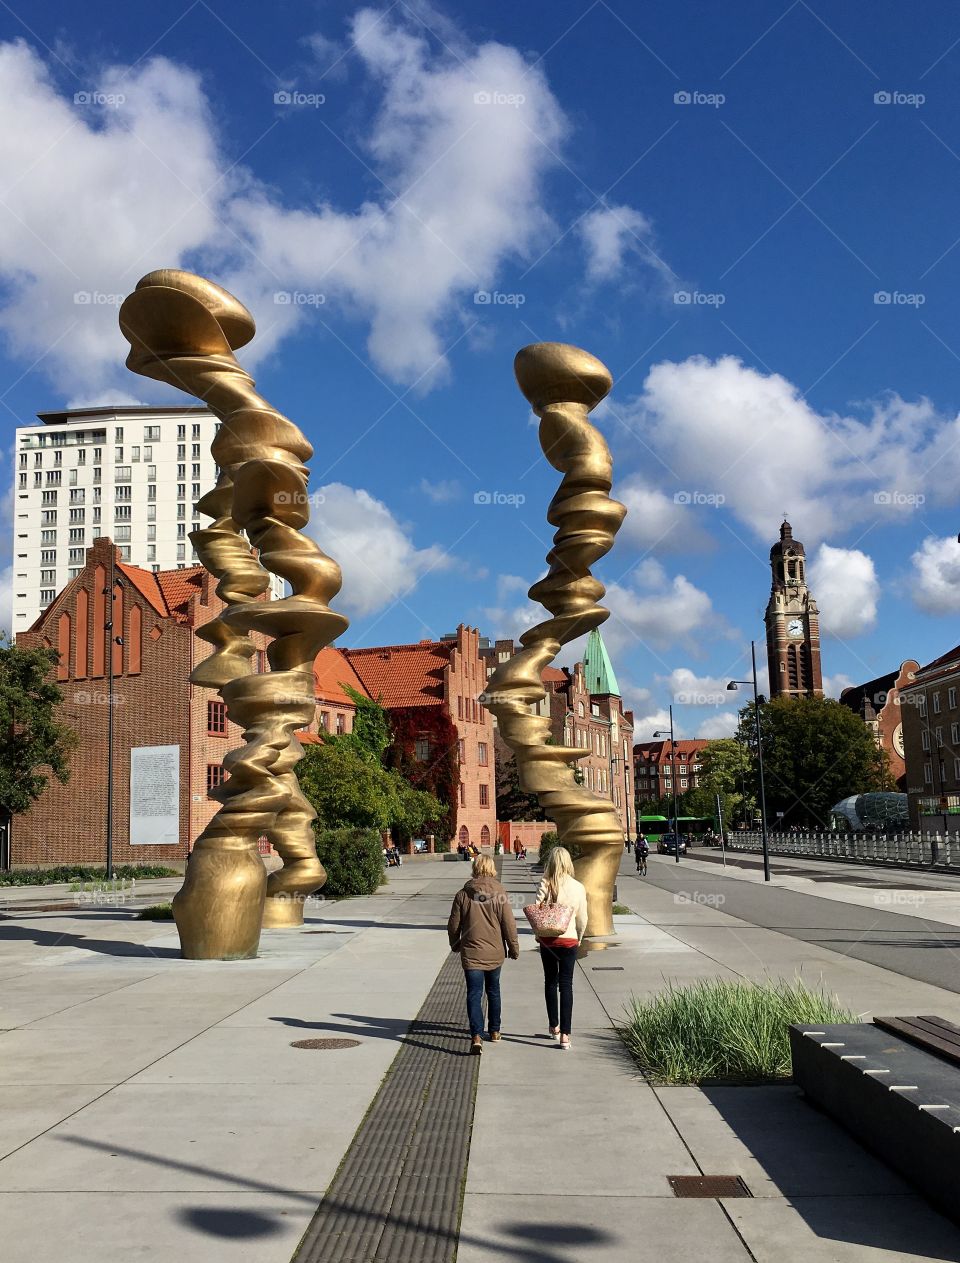 Sculpture in Malmö, Sweden.